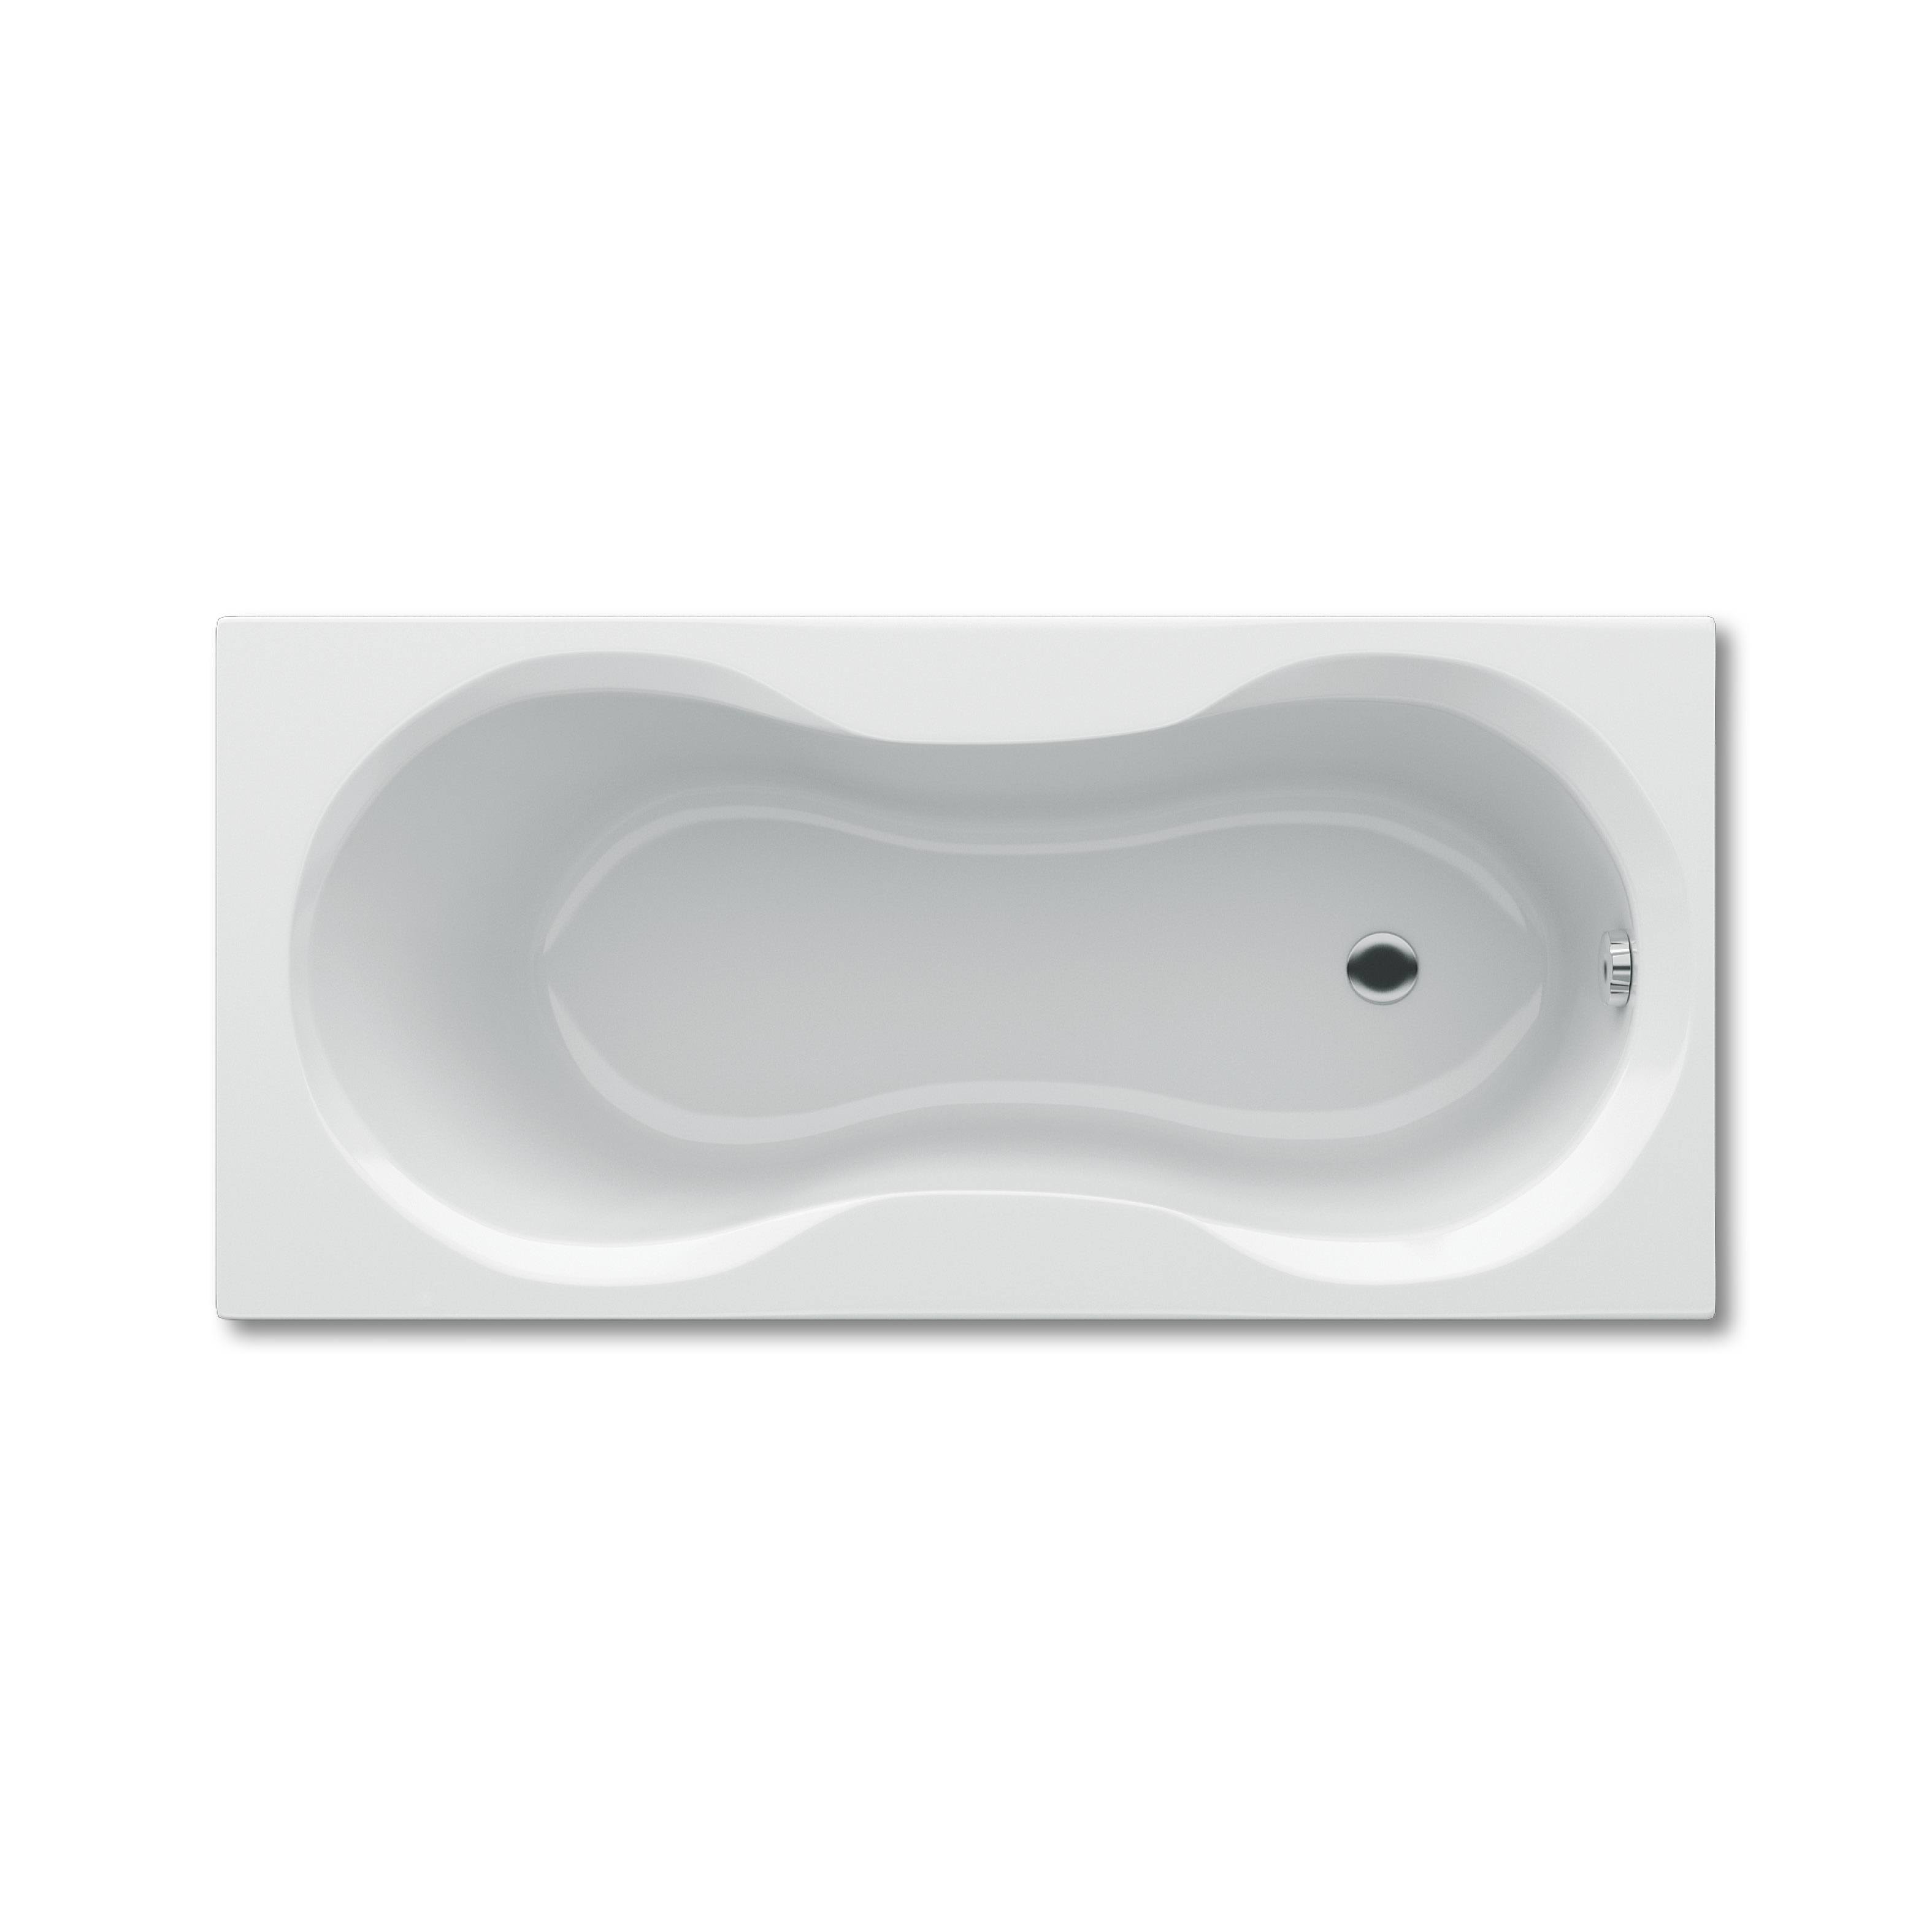 Ванна акриловая Koller Pool Malibu170X75, размер 170x75, цвет белый - фото 1